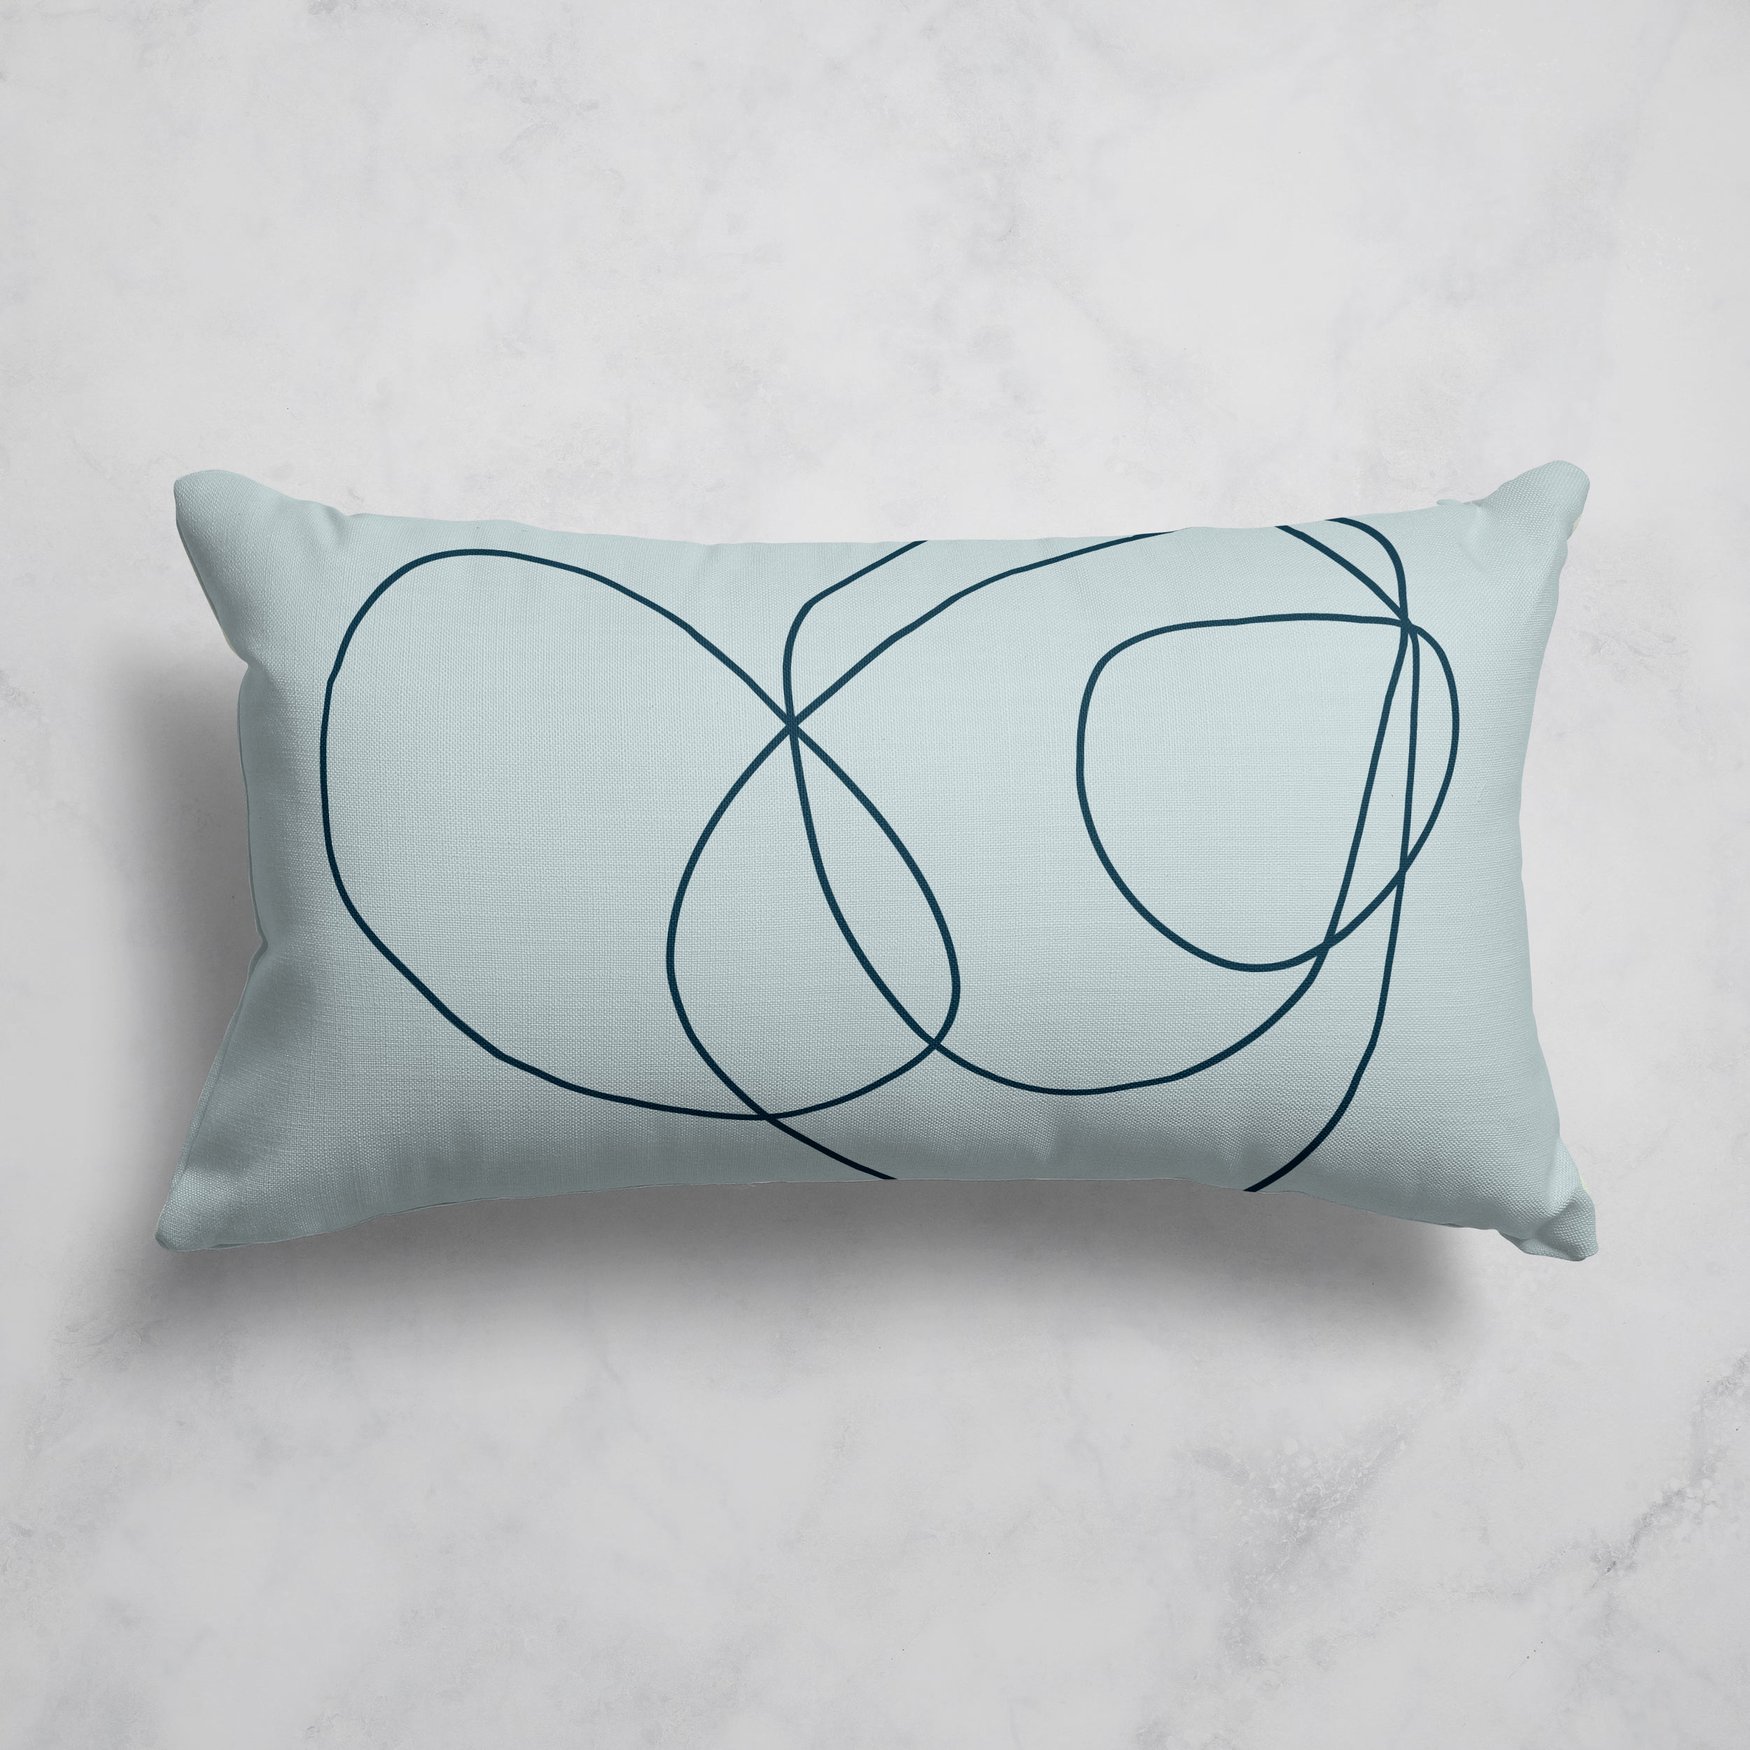 Image of Rock Garden No. 2 Rectangular Throw Pillow in Light Blue